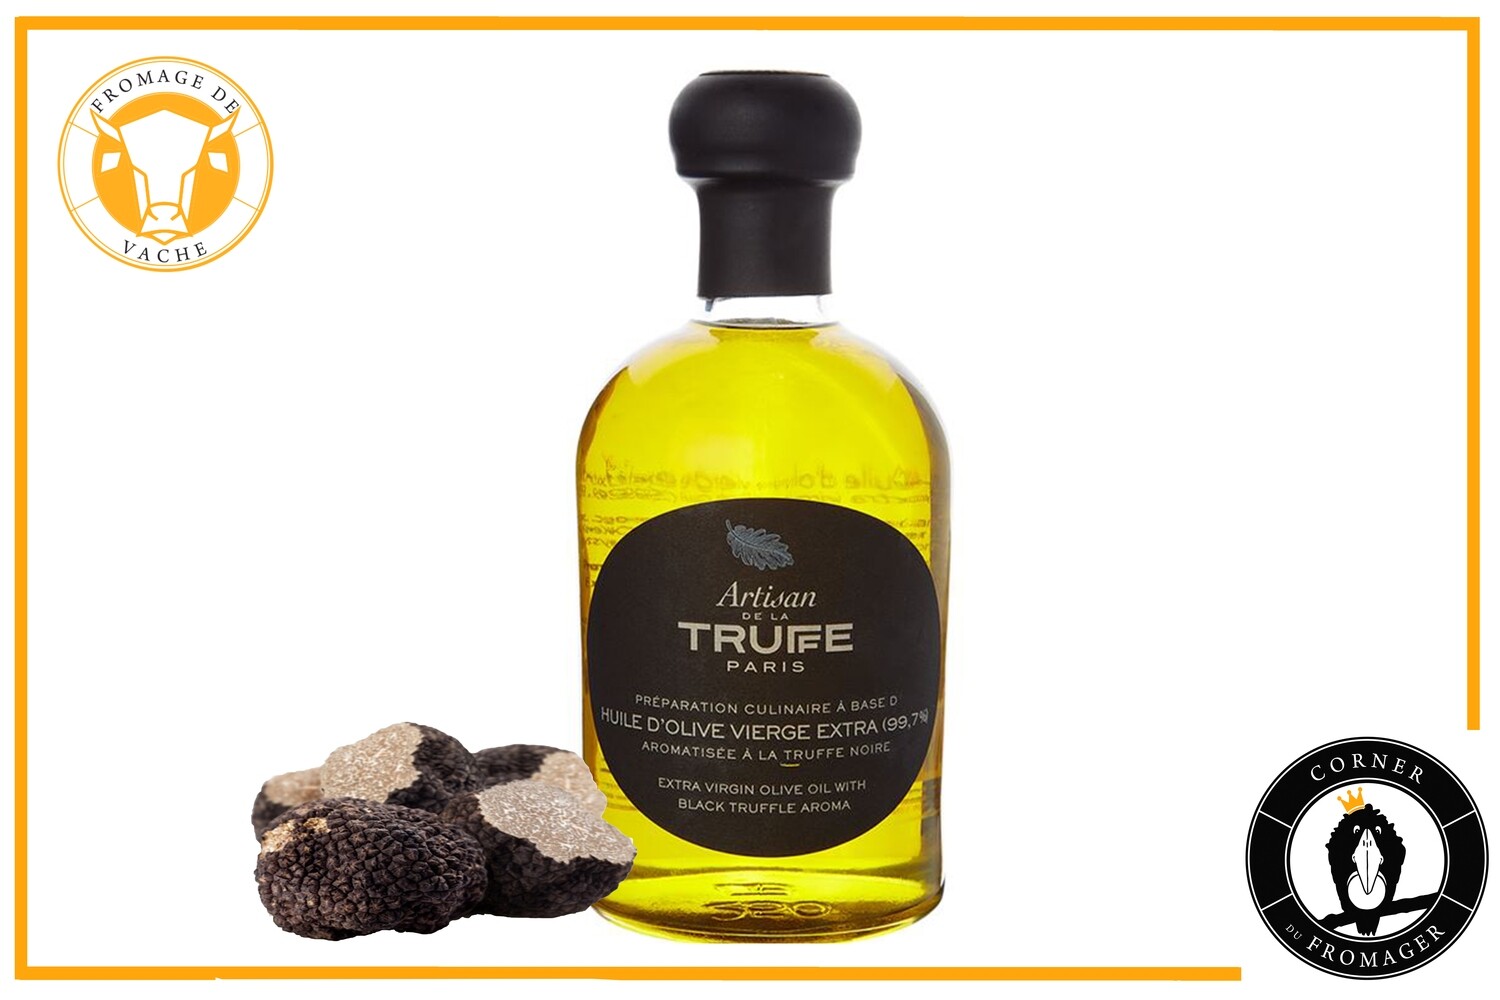 Huile d'olive vierge extra saveur truffe noire